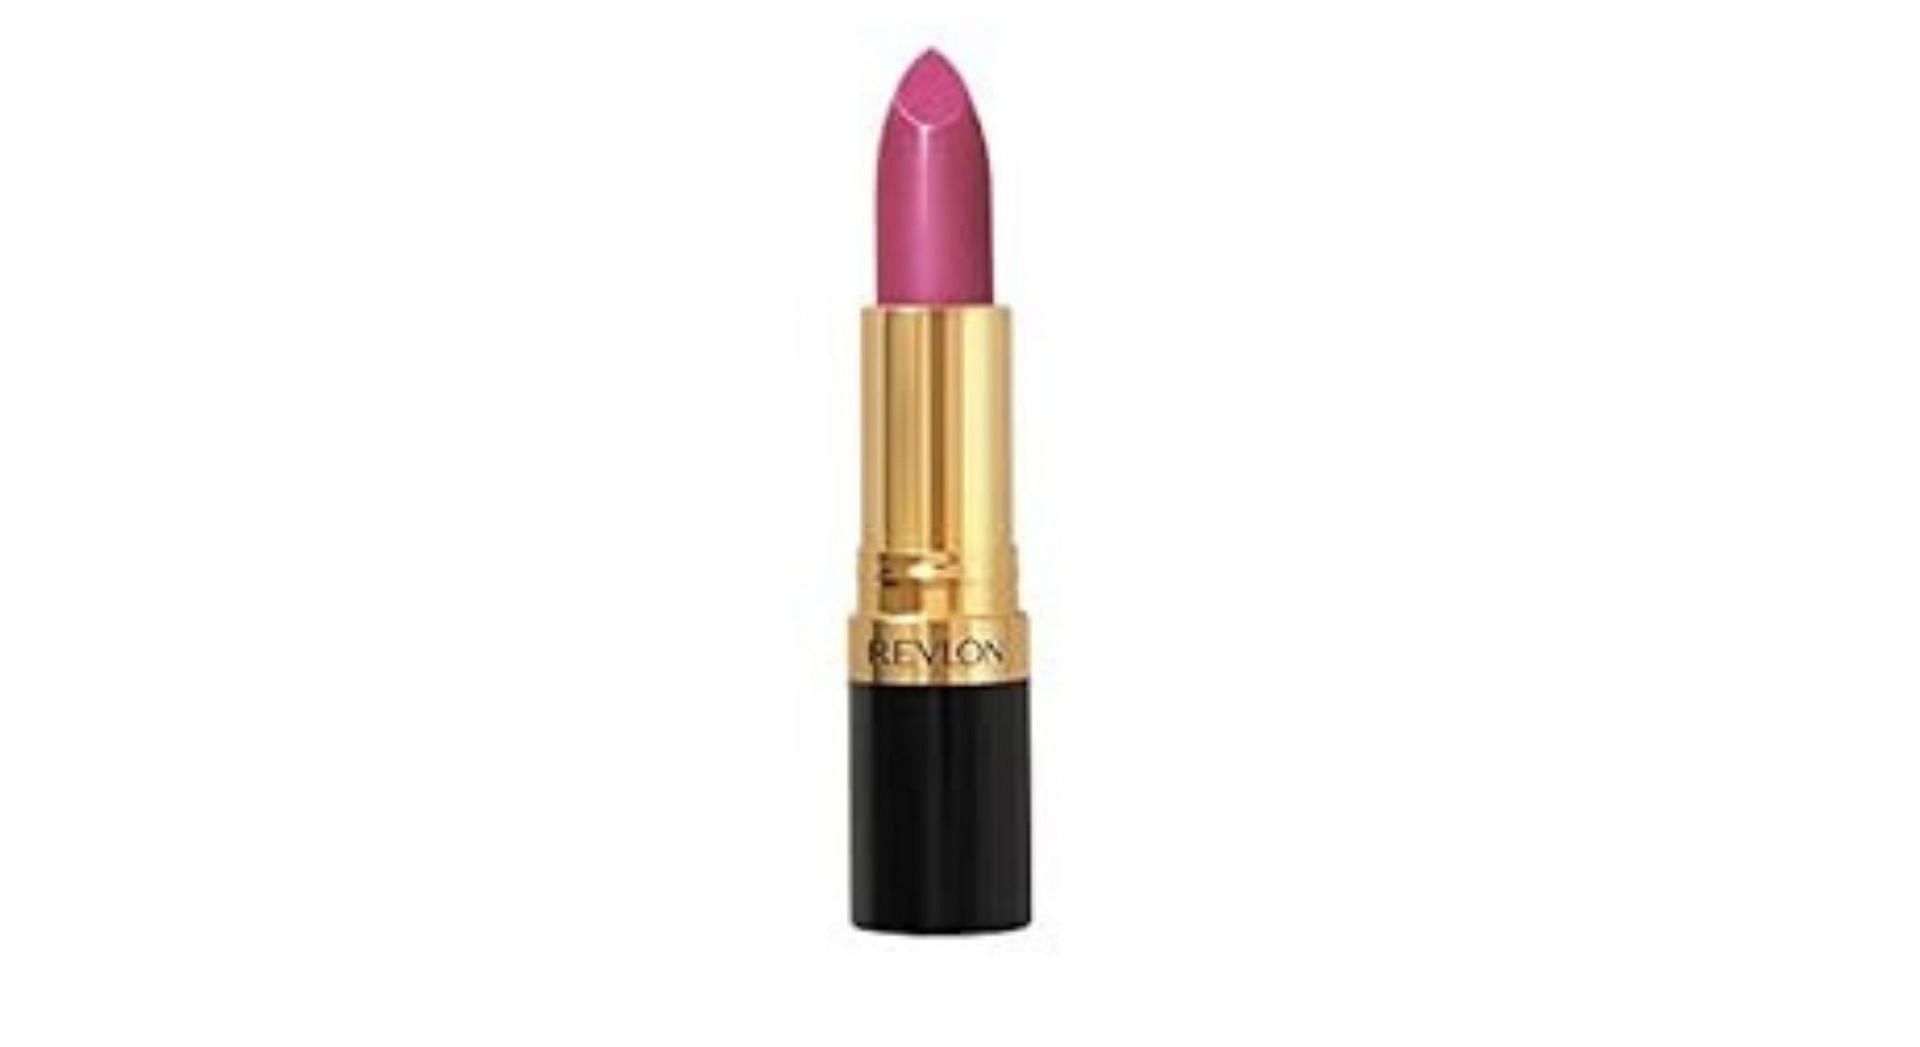 Revlon Super Lustrous Lipstick, Fuchsia Shock, Shine Finish (Image via Amazon)